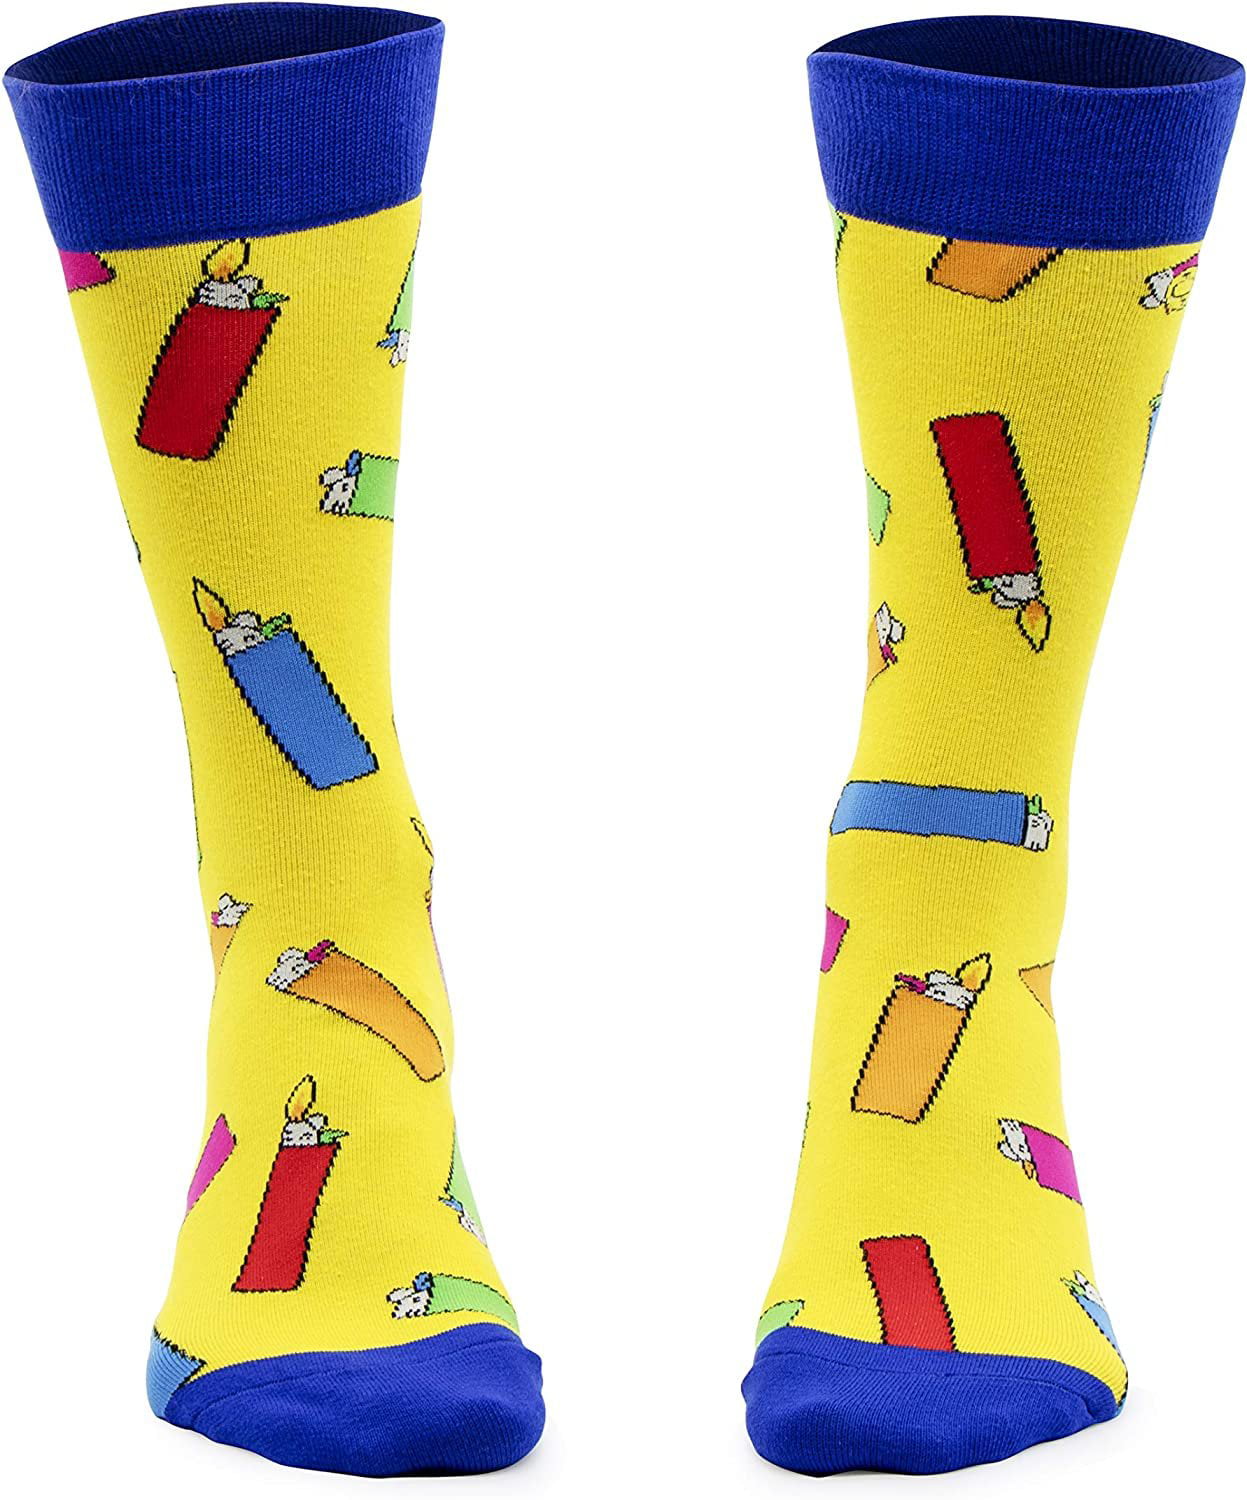 FATMINGO SOCKS Crazy Fun Colorful Funny Socks For Men Casual Mens